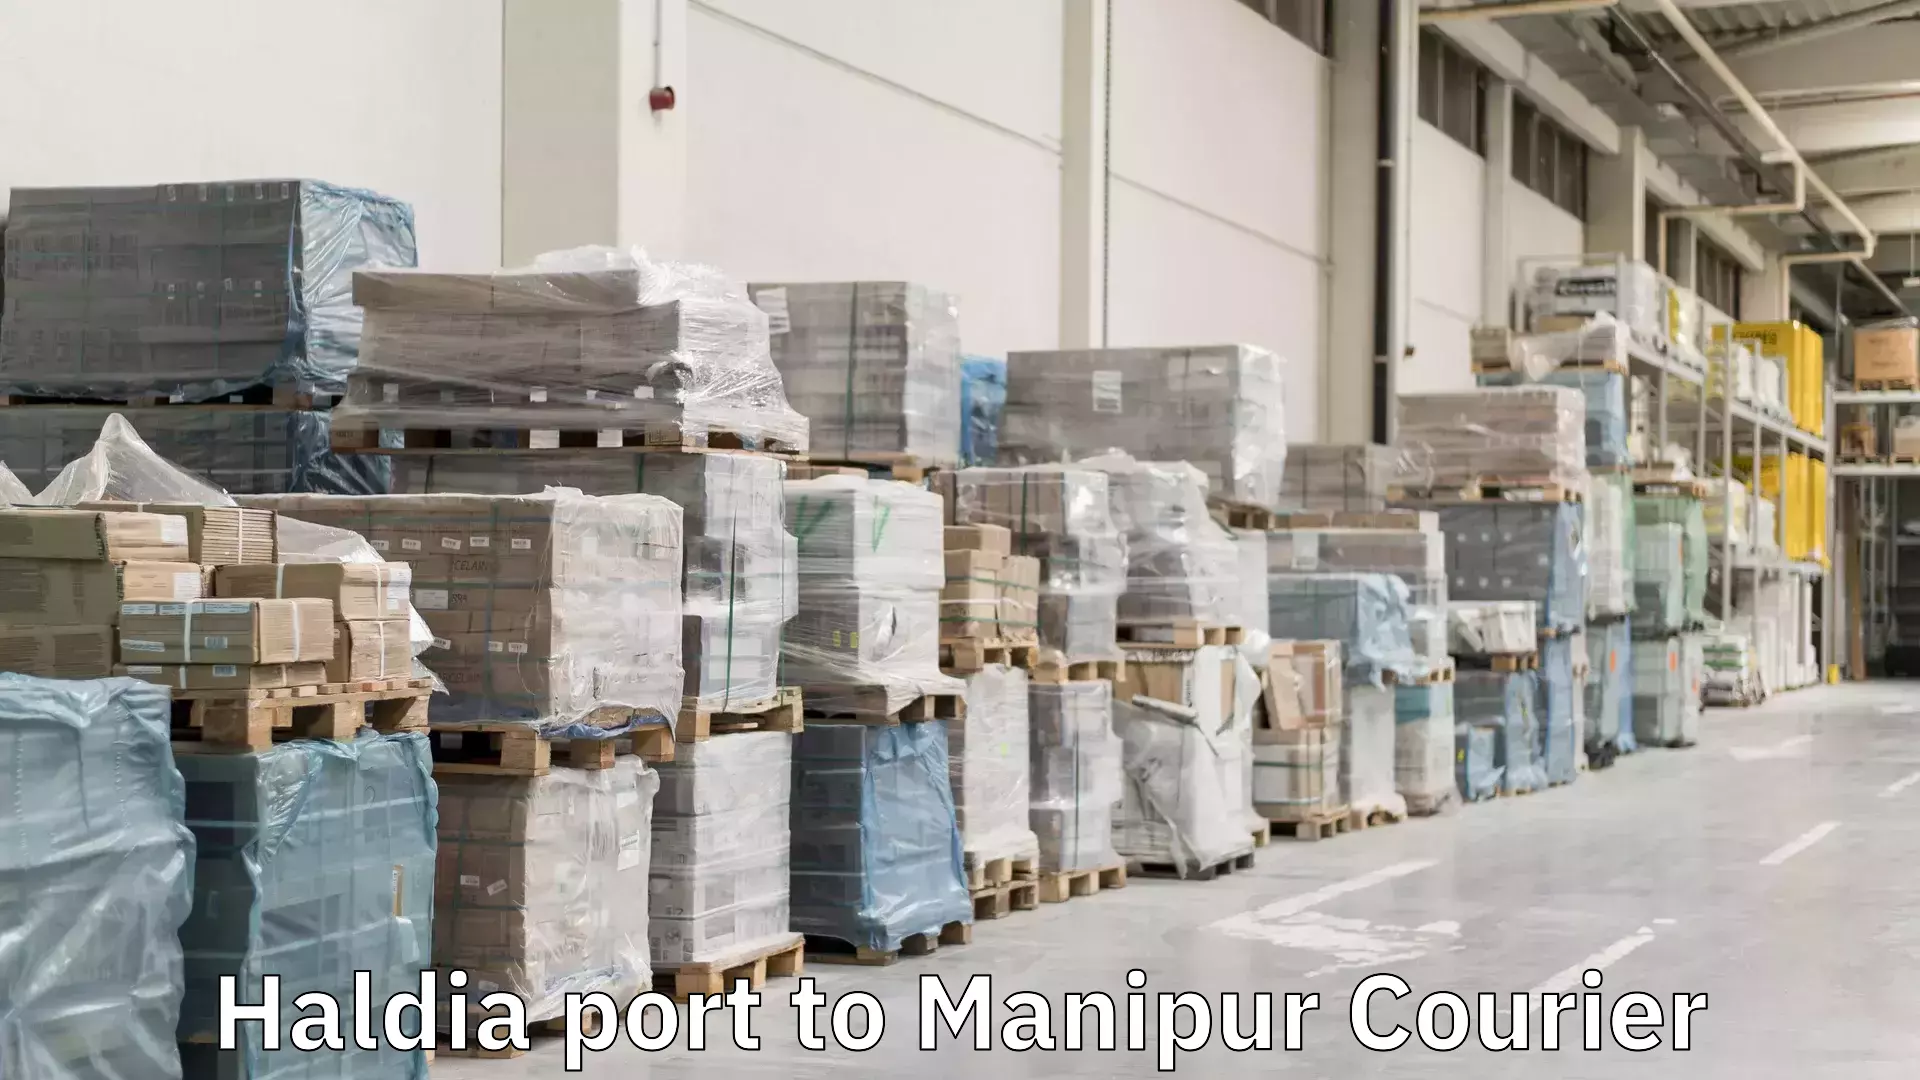 Professional parcel services Haldia port to Thoubal